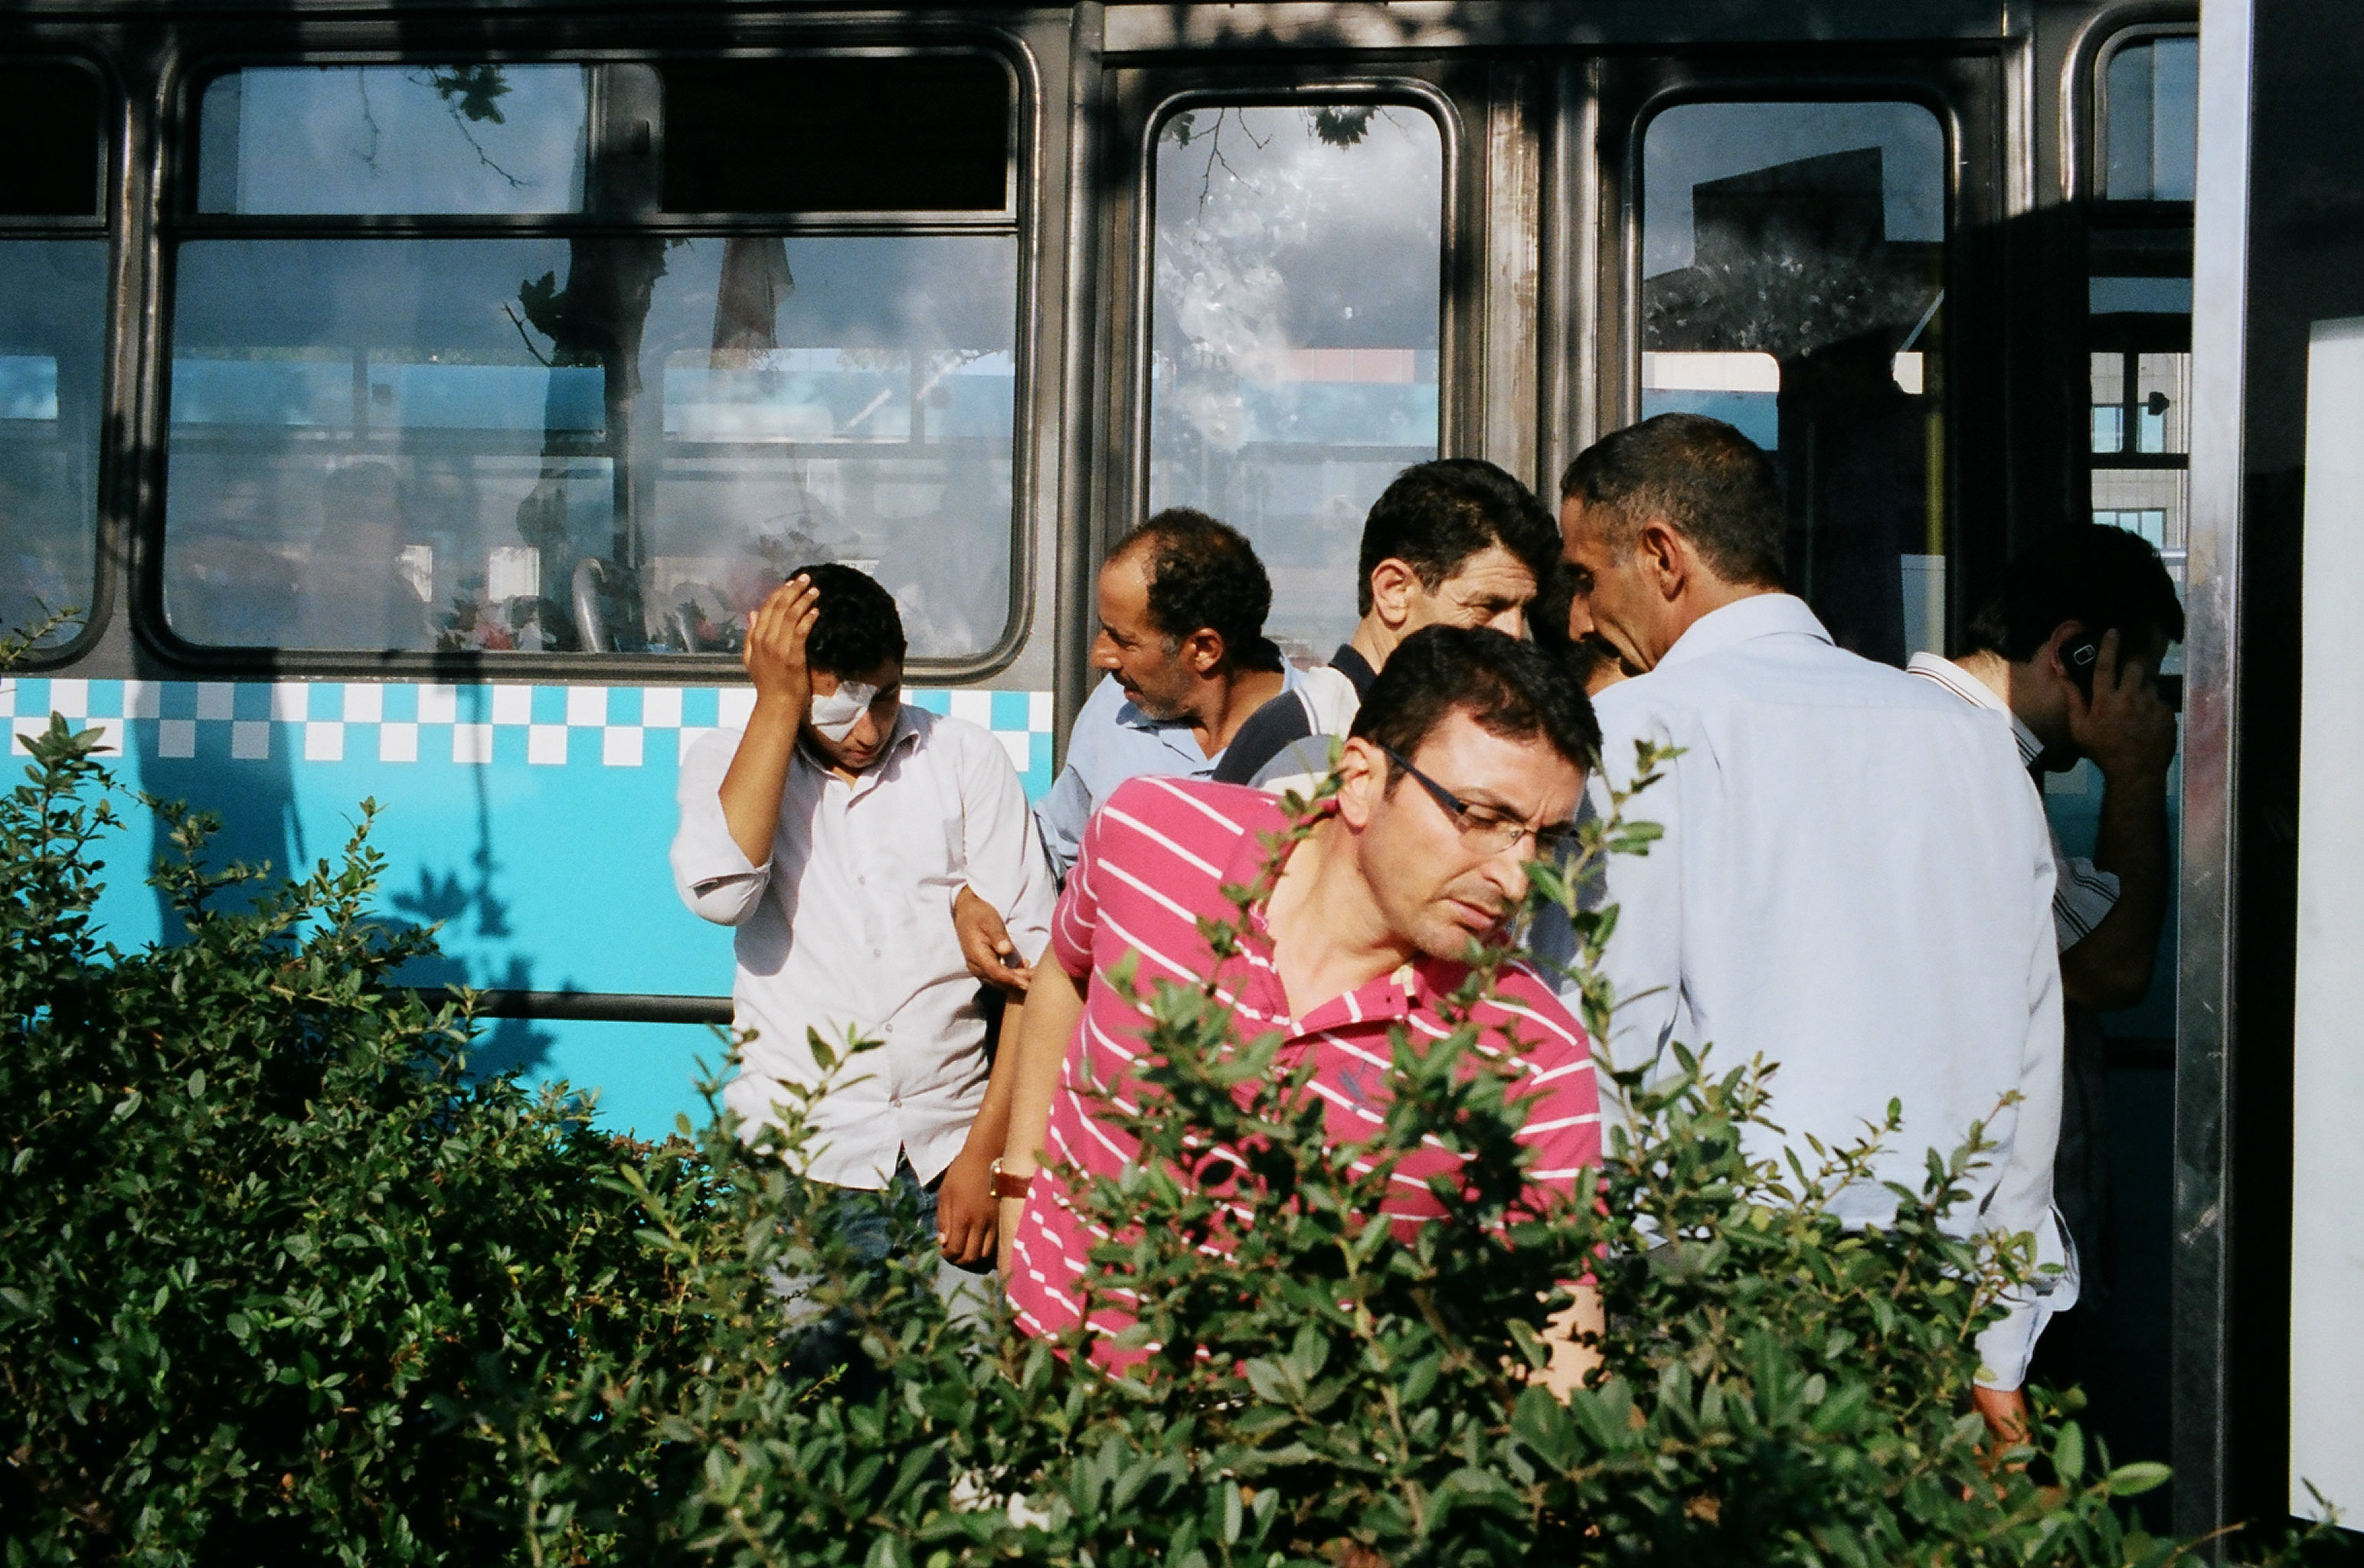 Moving men. Istanbul, 2014. Street Photo by Eric Kim